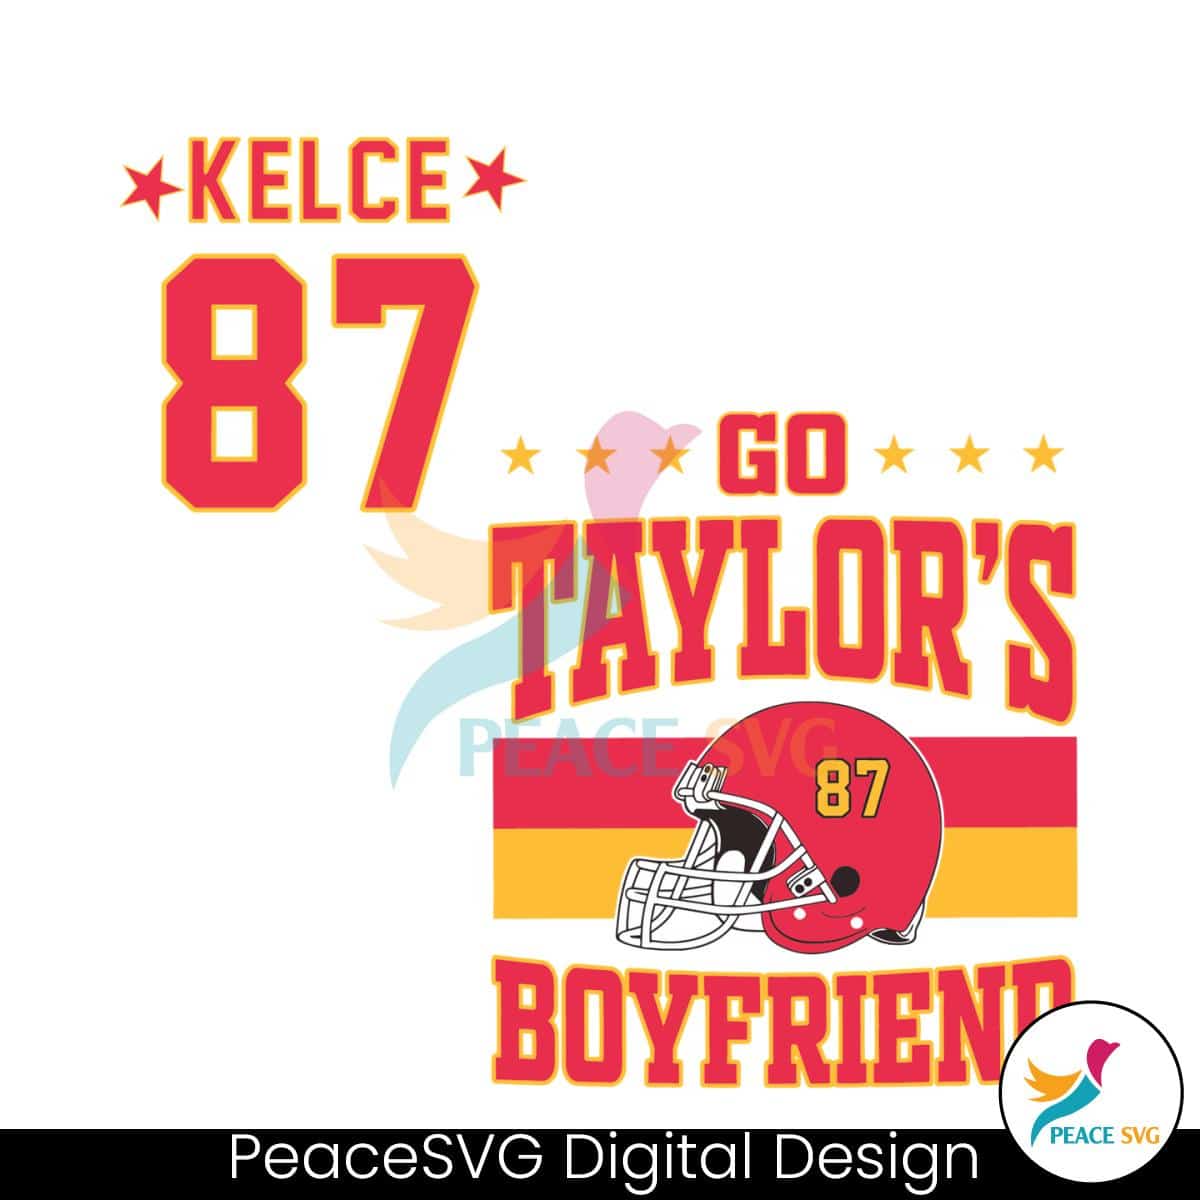 Go Taylors Boyfriend Kelce 87 SVG » PeaceSVG